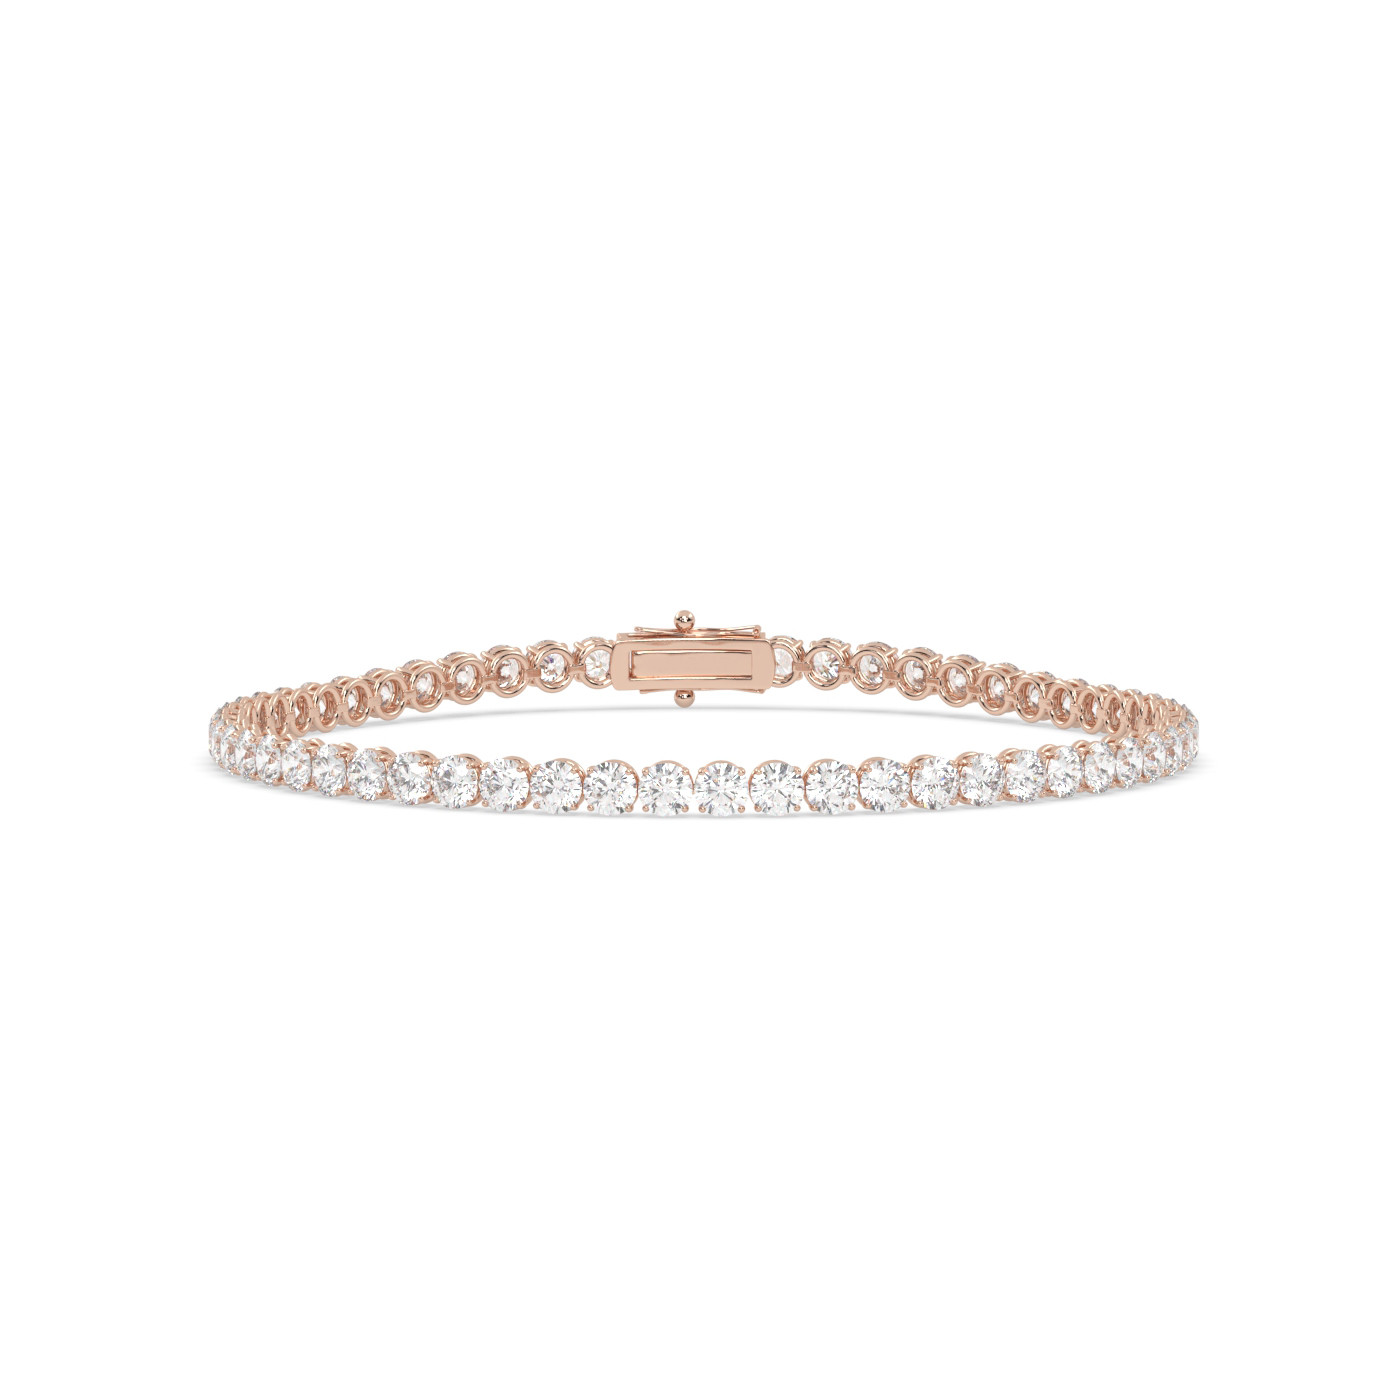 18k rose gold  3.0 carat round diamond tennis bracelet with traditional lock sytem